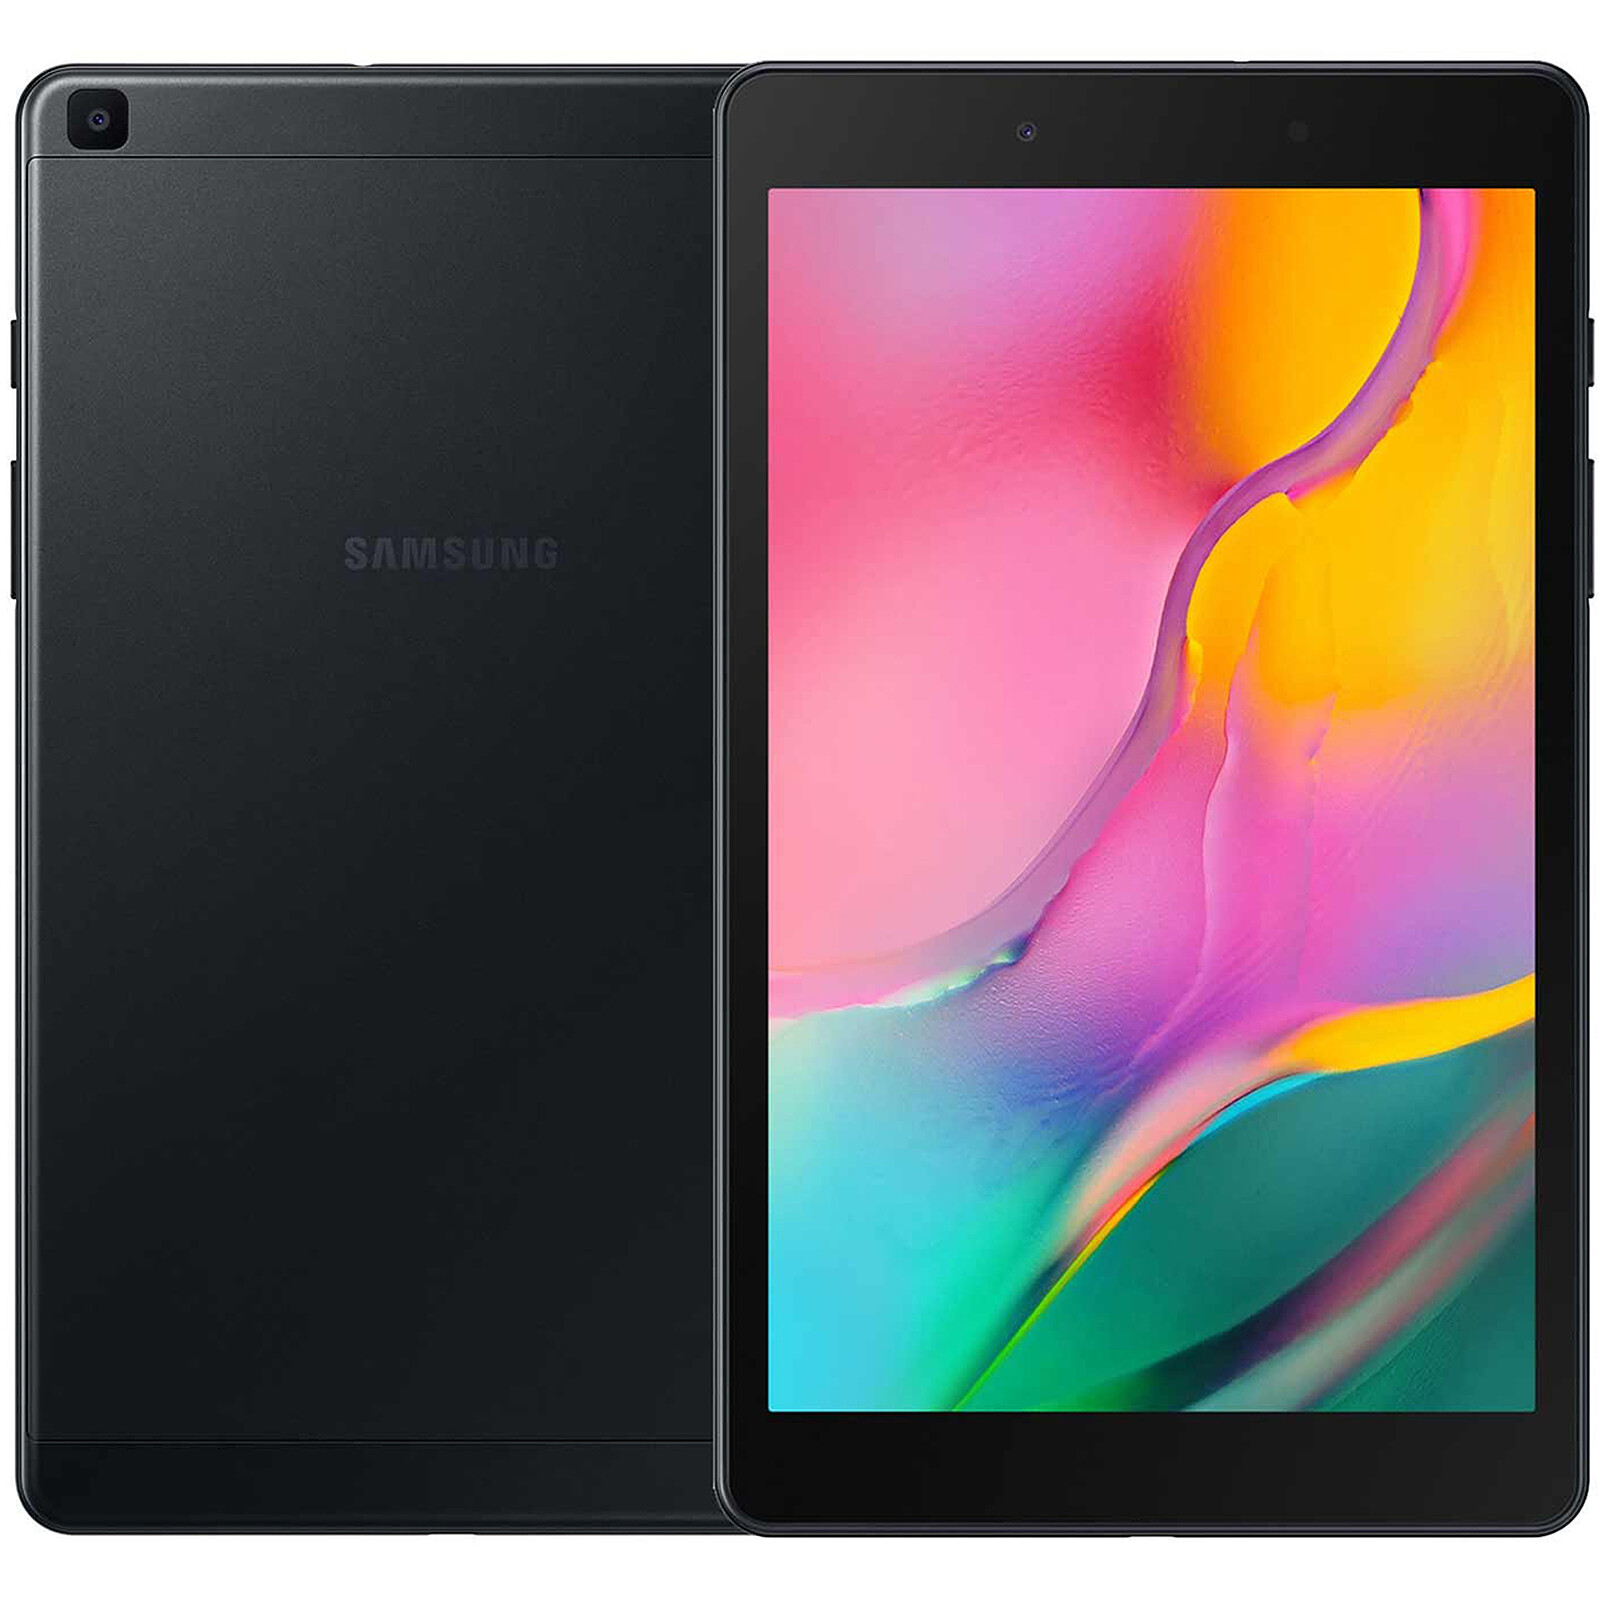 Samsung Galaxy Tab A 2016 10.1 SM-T580 16 Go Noir · Reconditionné -  Tablette tactile - LDLC